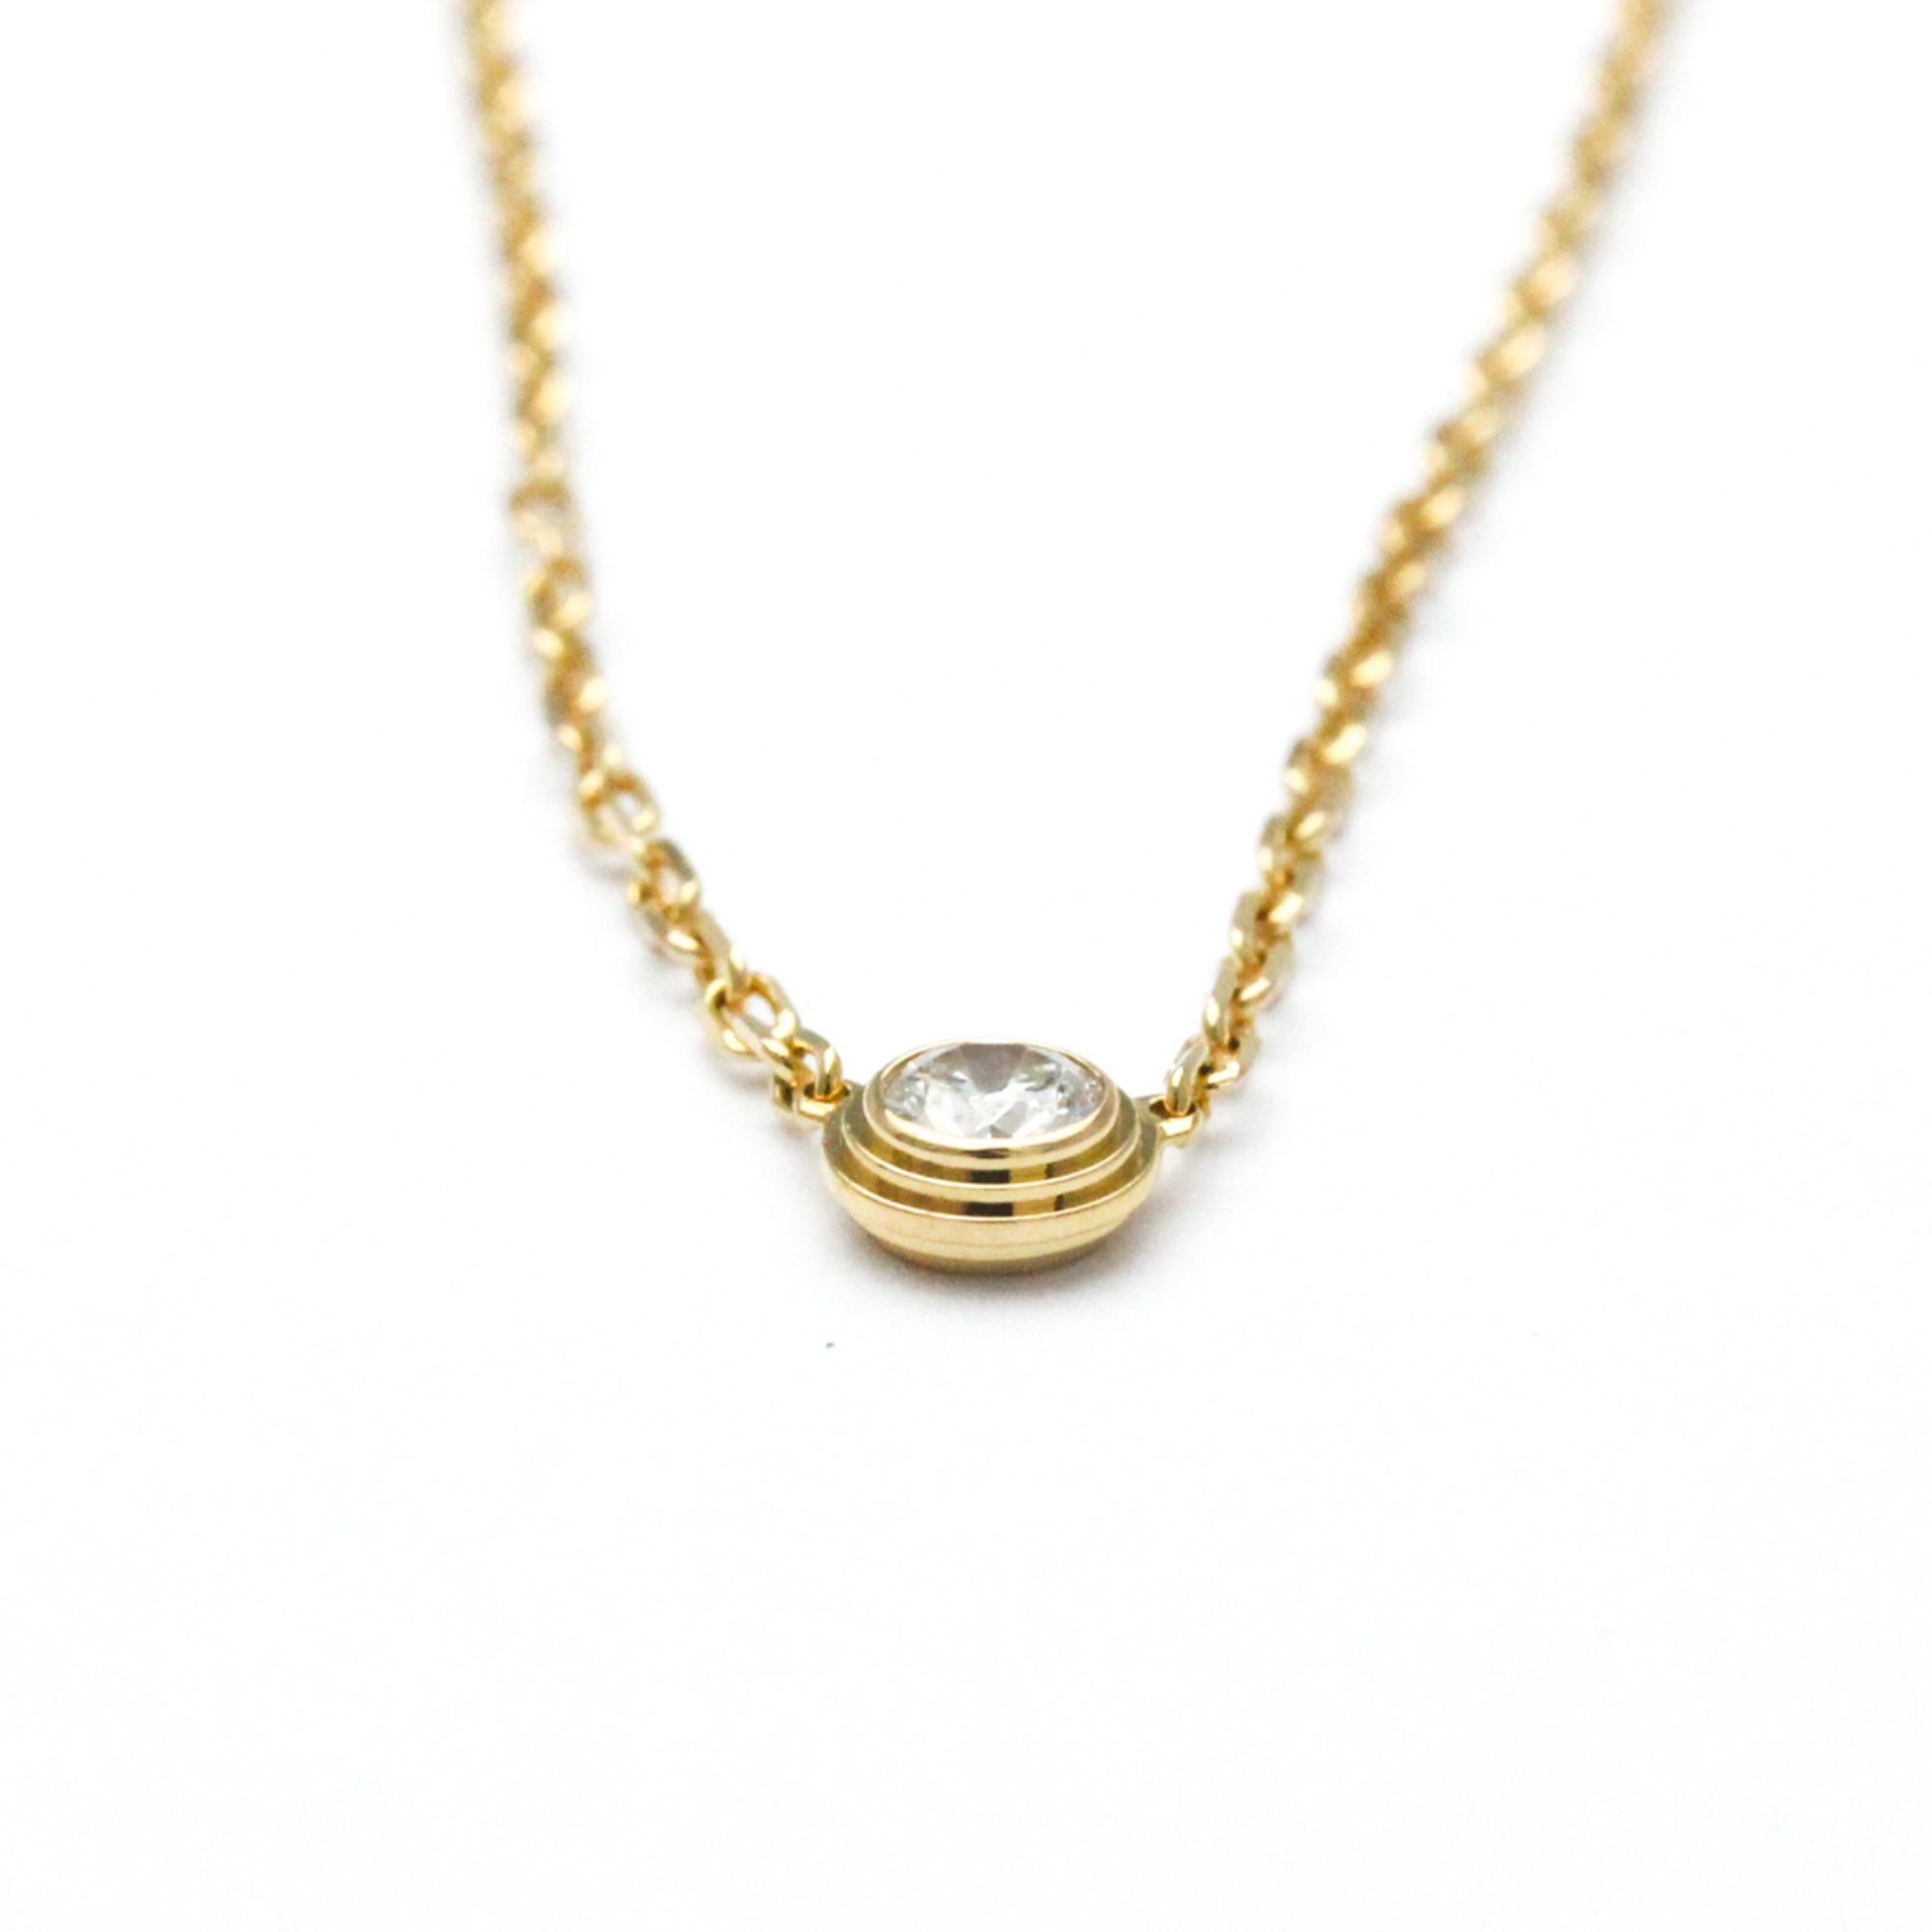 Cartier Sapphire Leger Necklace B7218400 Pink Gold (18K) Sapphire Men,Women Fashion Pendant Necklace (Pink Gold)